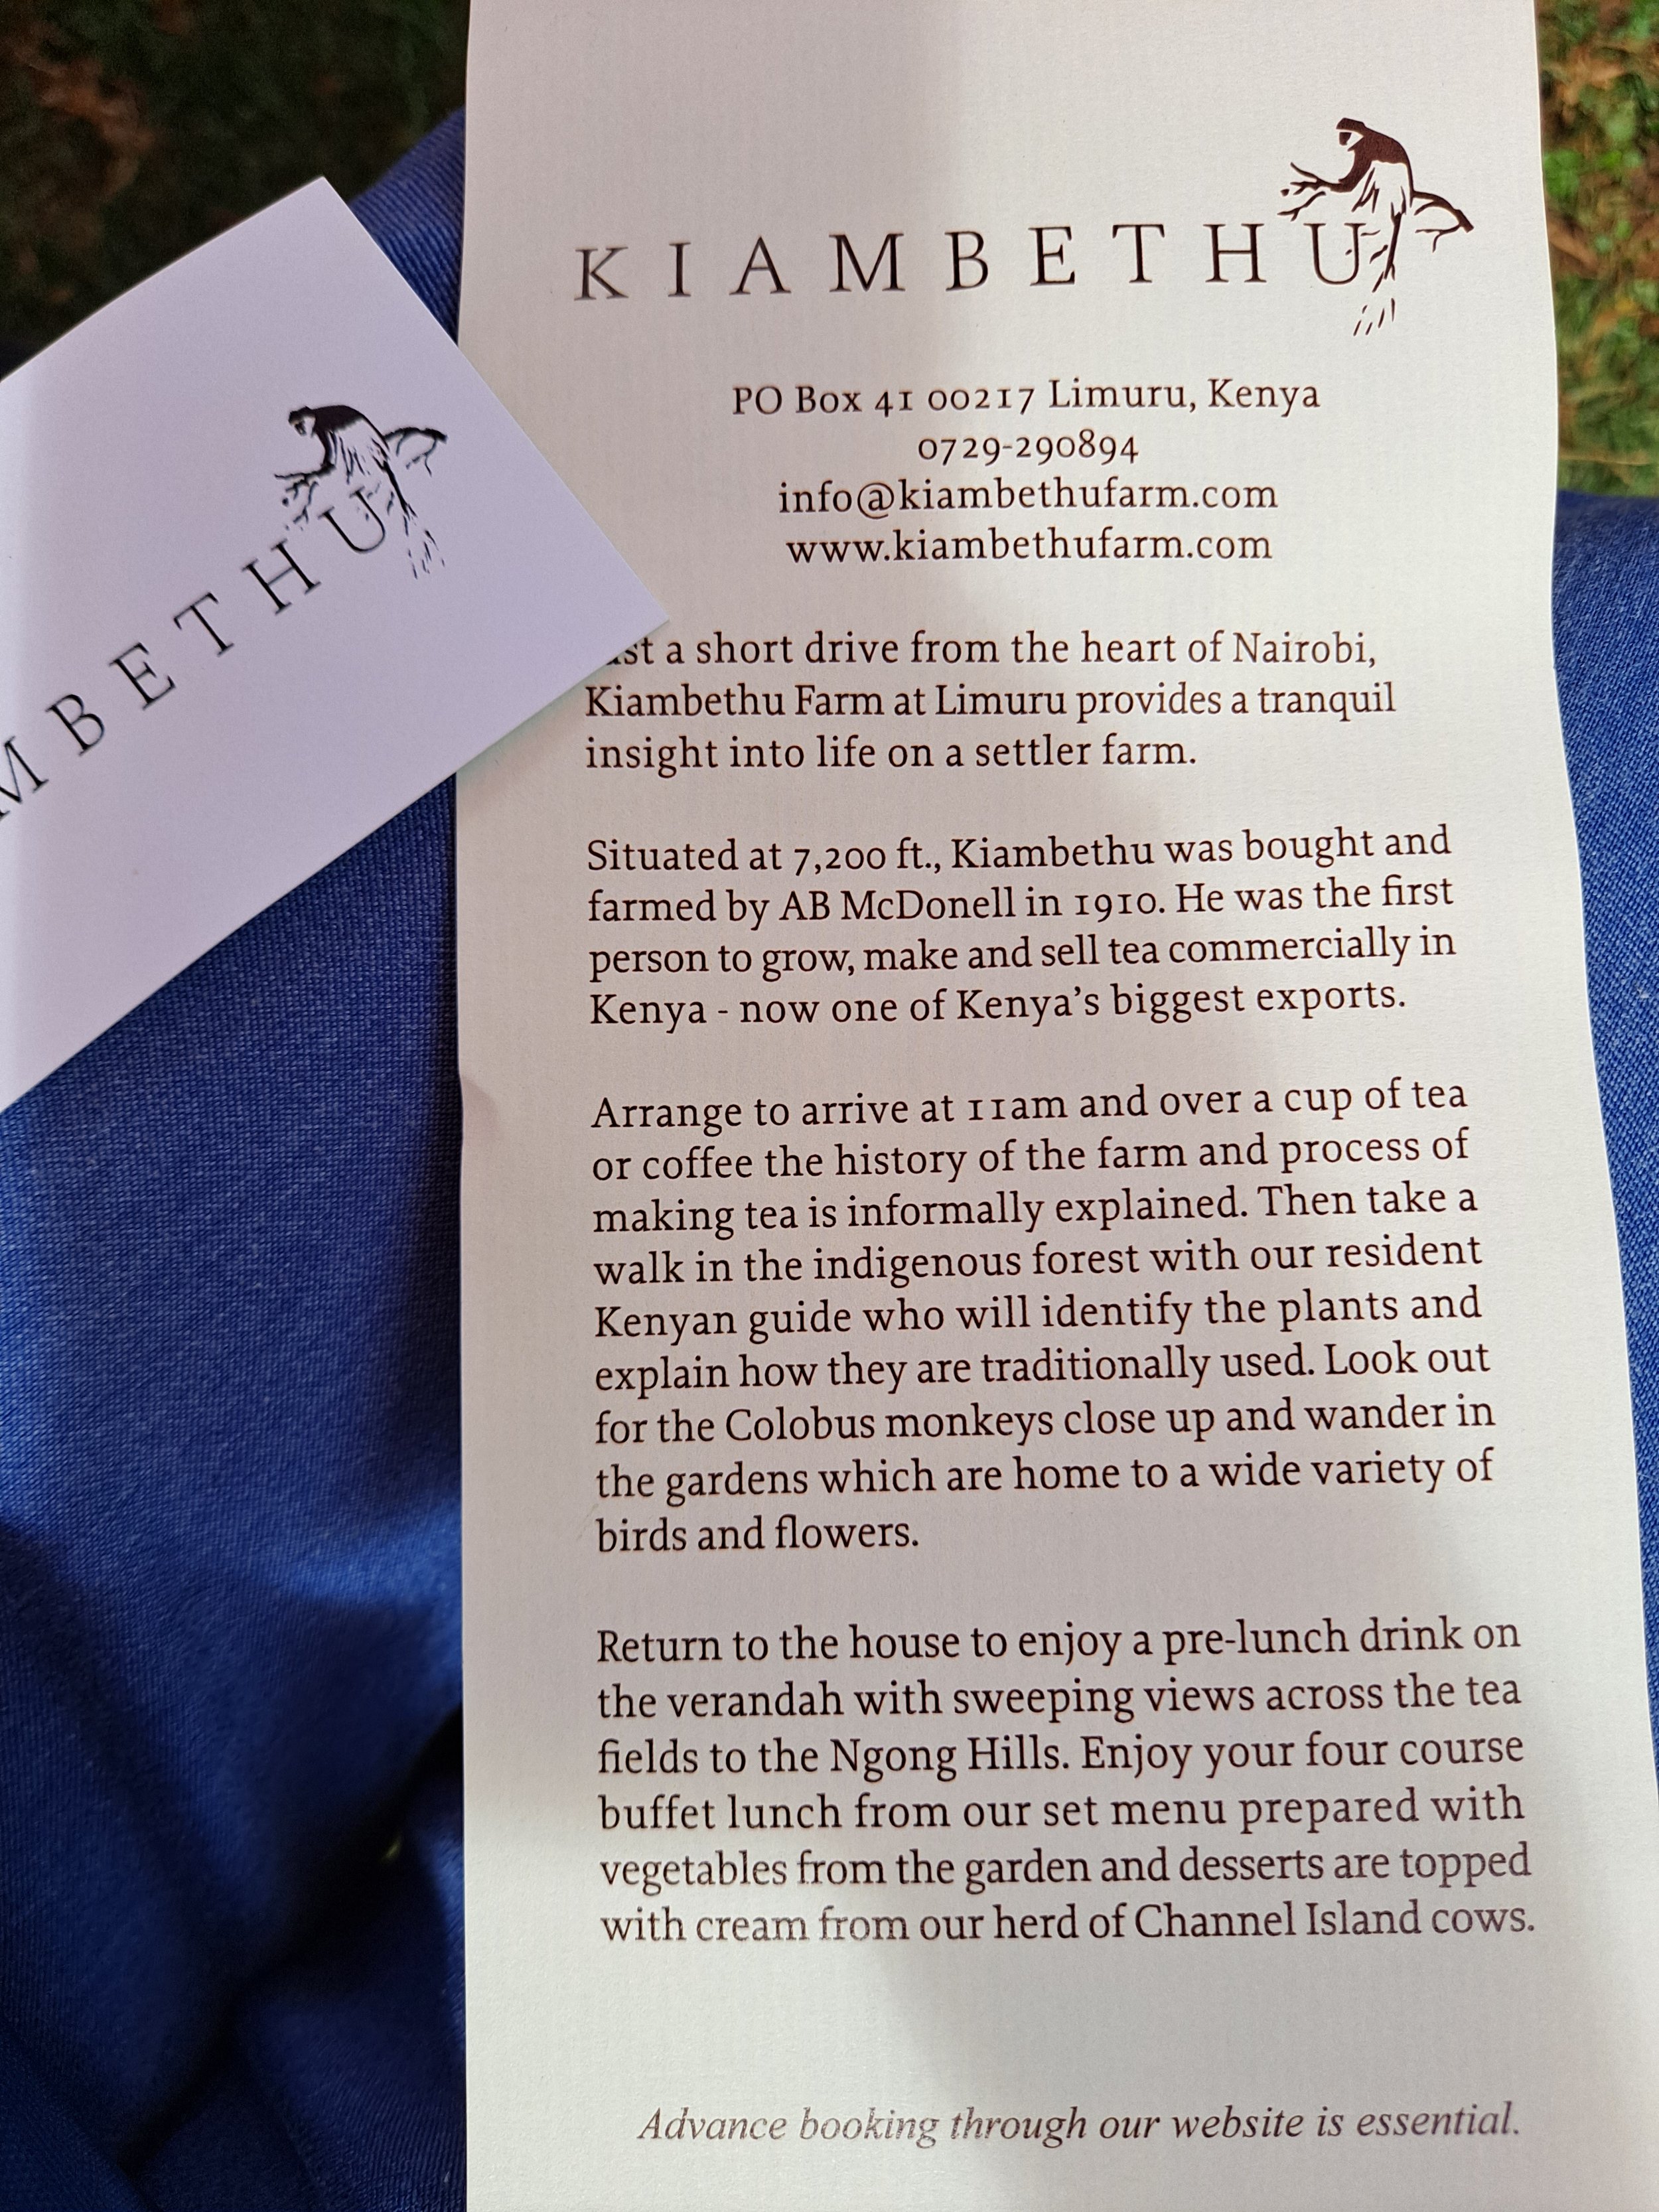 Info about the Kiambethu Tea Farm